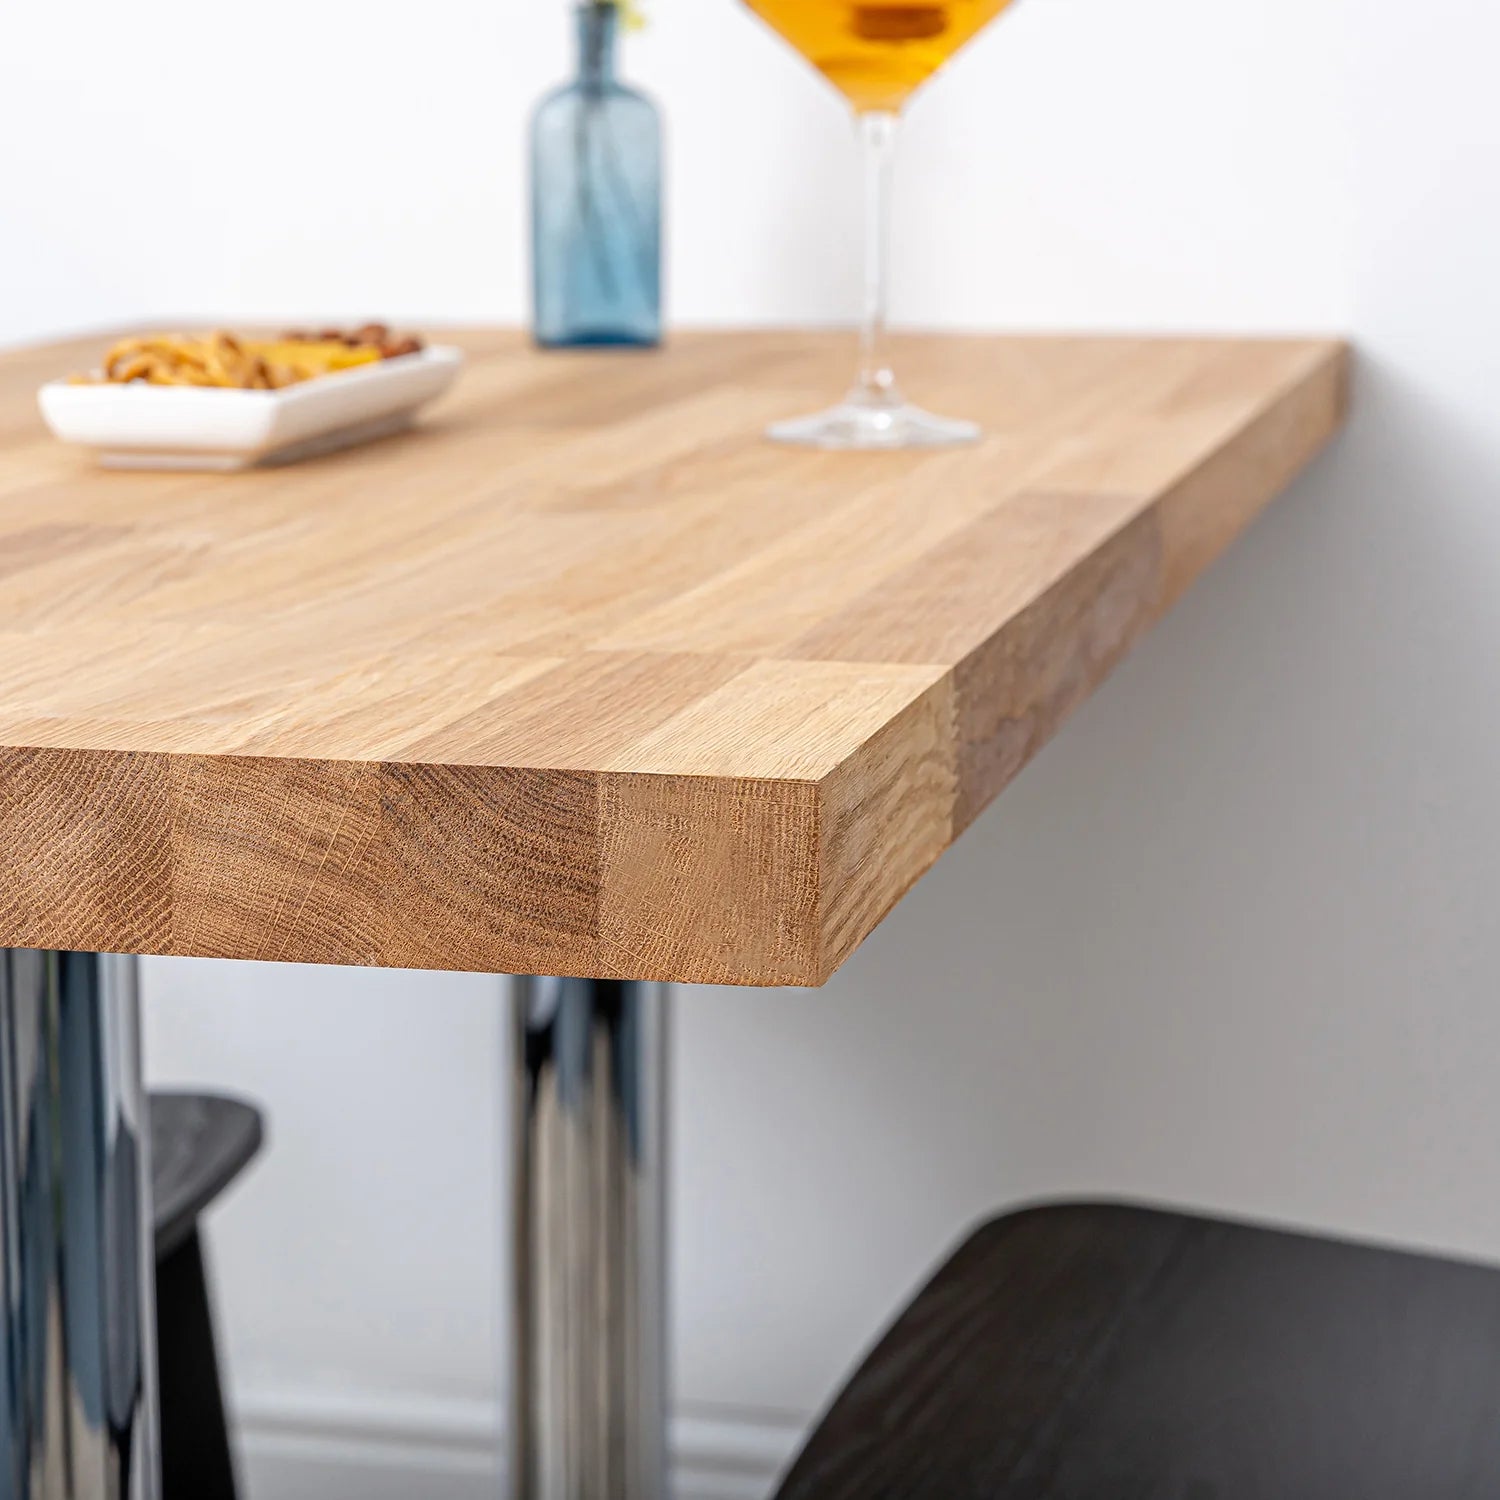 Solid Prime Oak Table with Chrome Pedestal Base